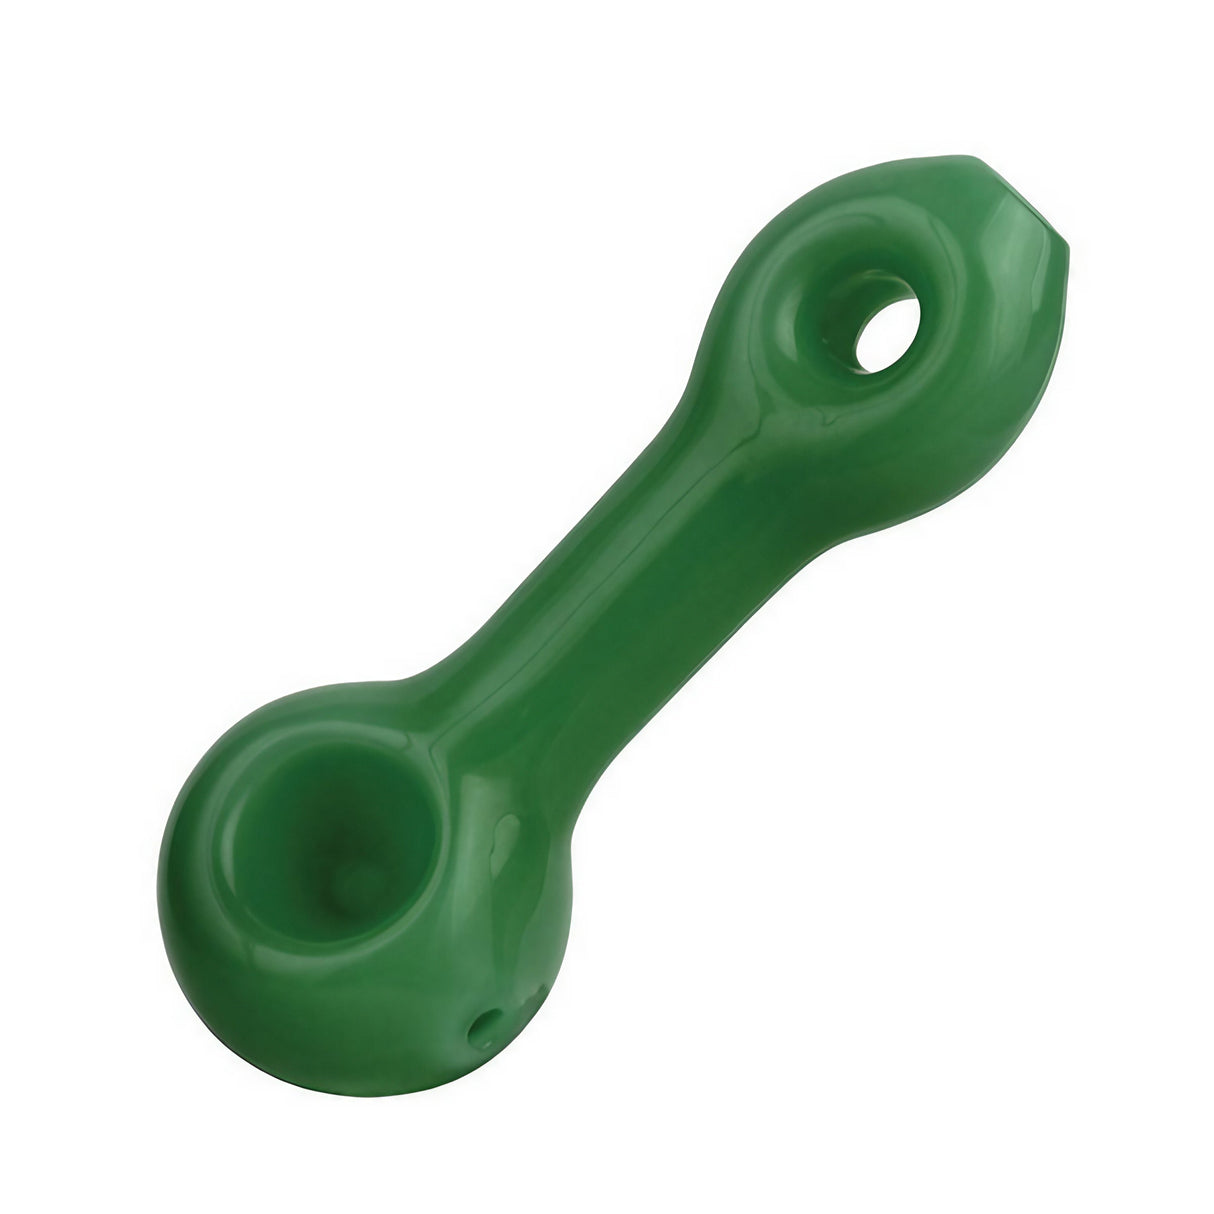 Pulsar Donut Handpipe - Green 3.5" Borosilicate Glass Spoon Pipe, Top View